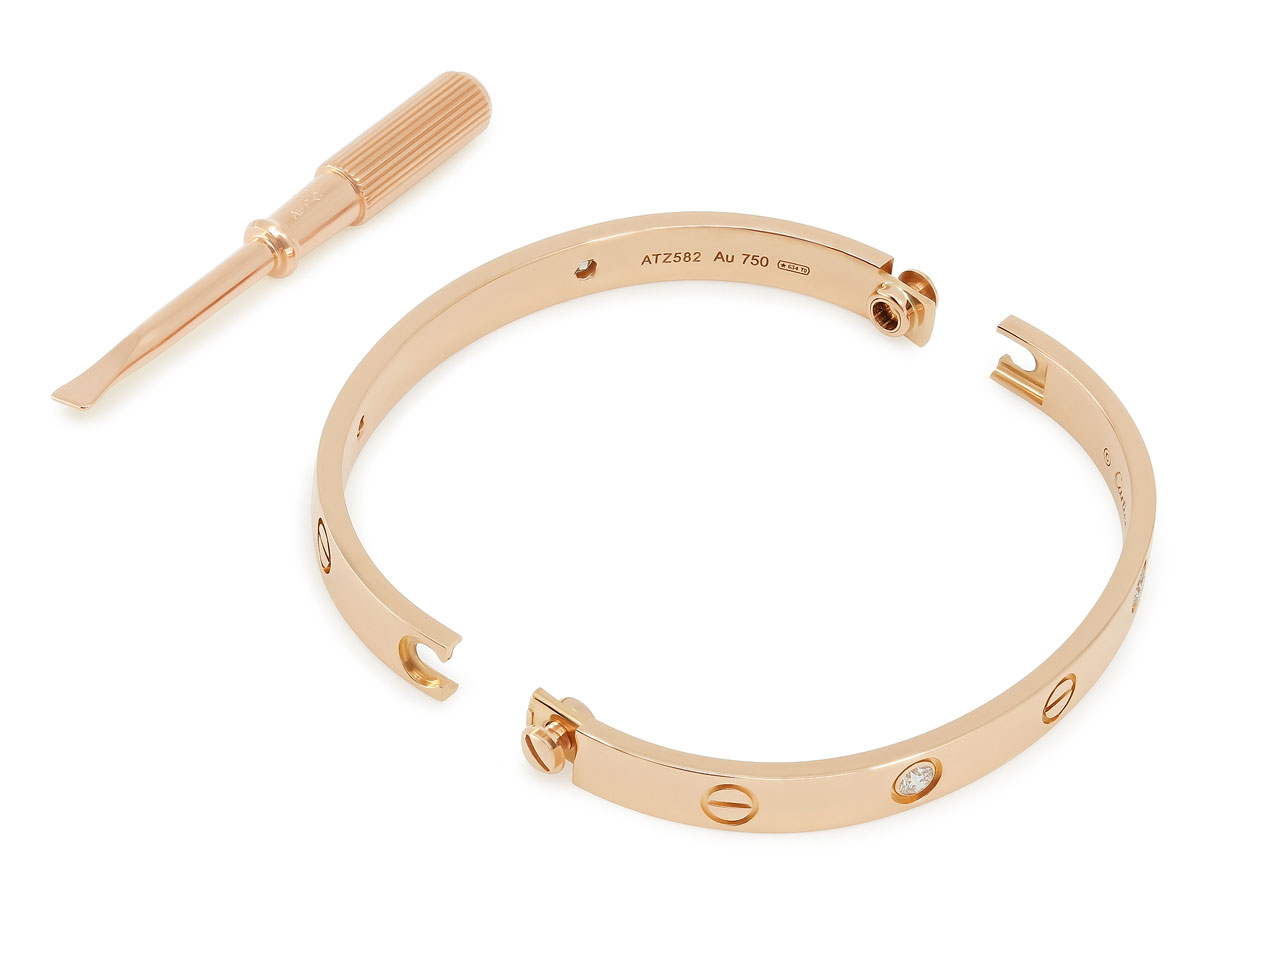 Cartier LOVE Bracelet Sizes: What Size Should I Buy?